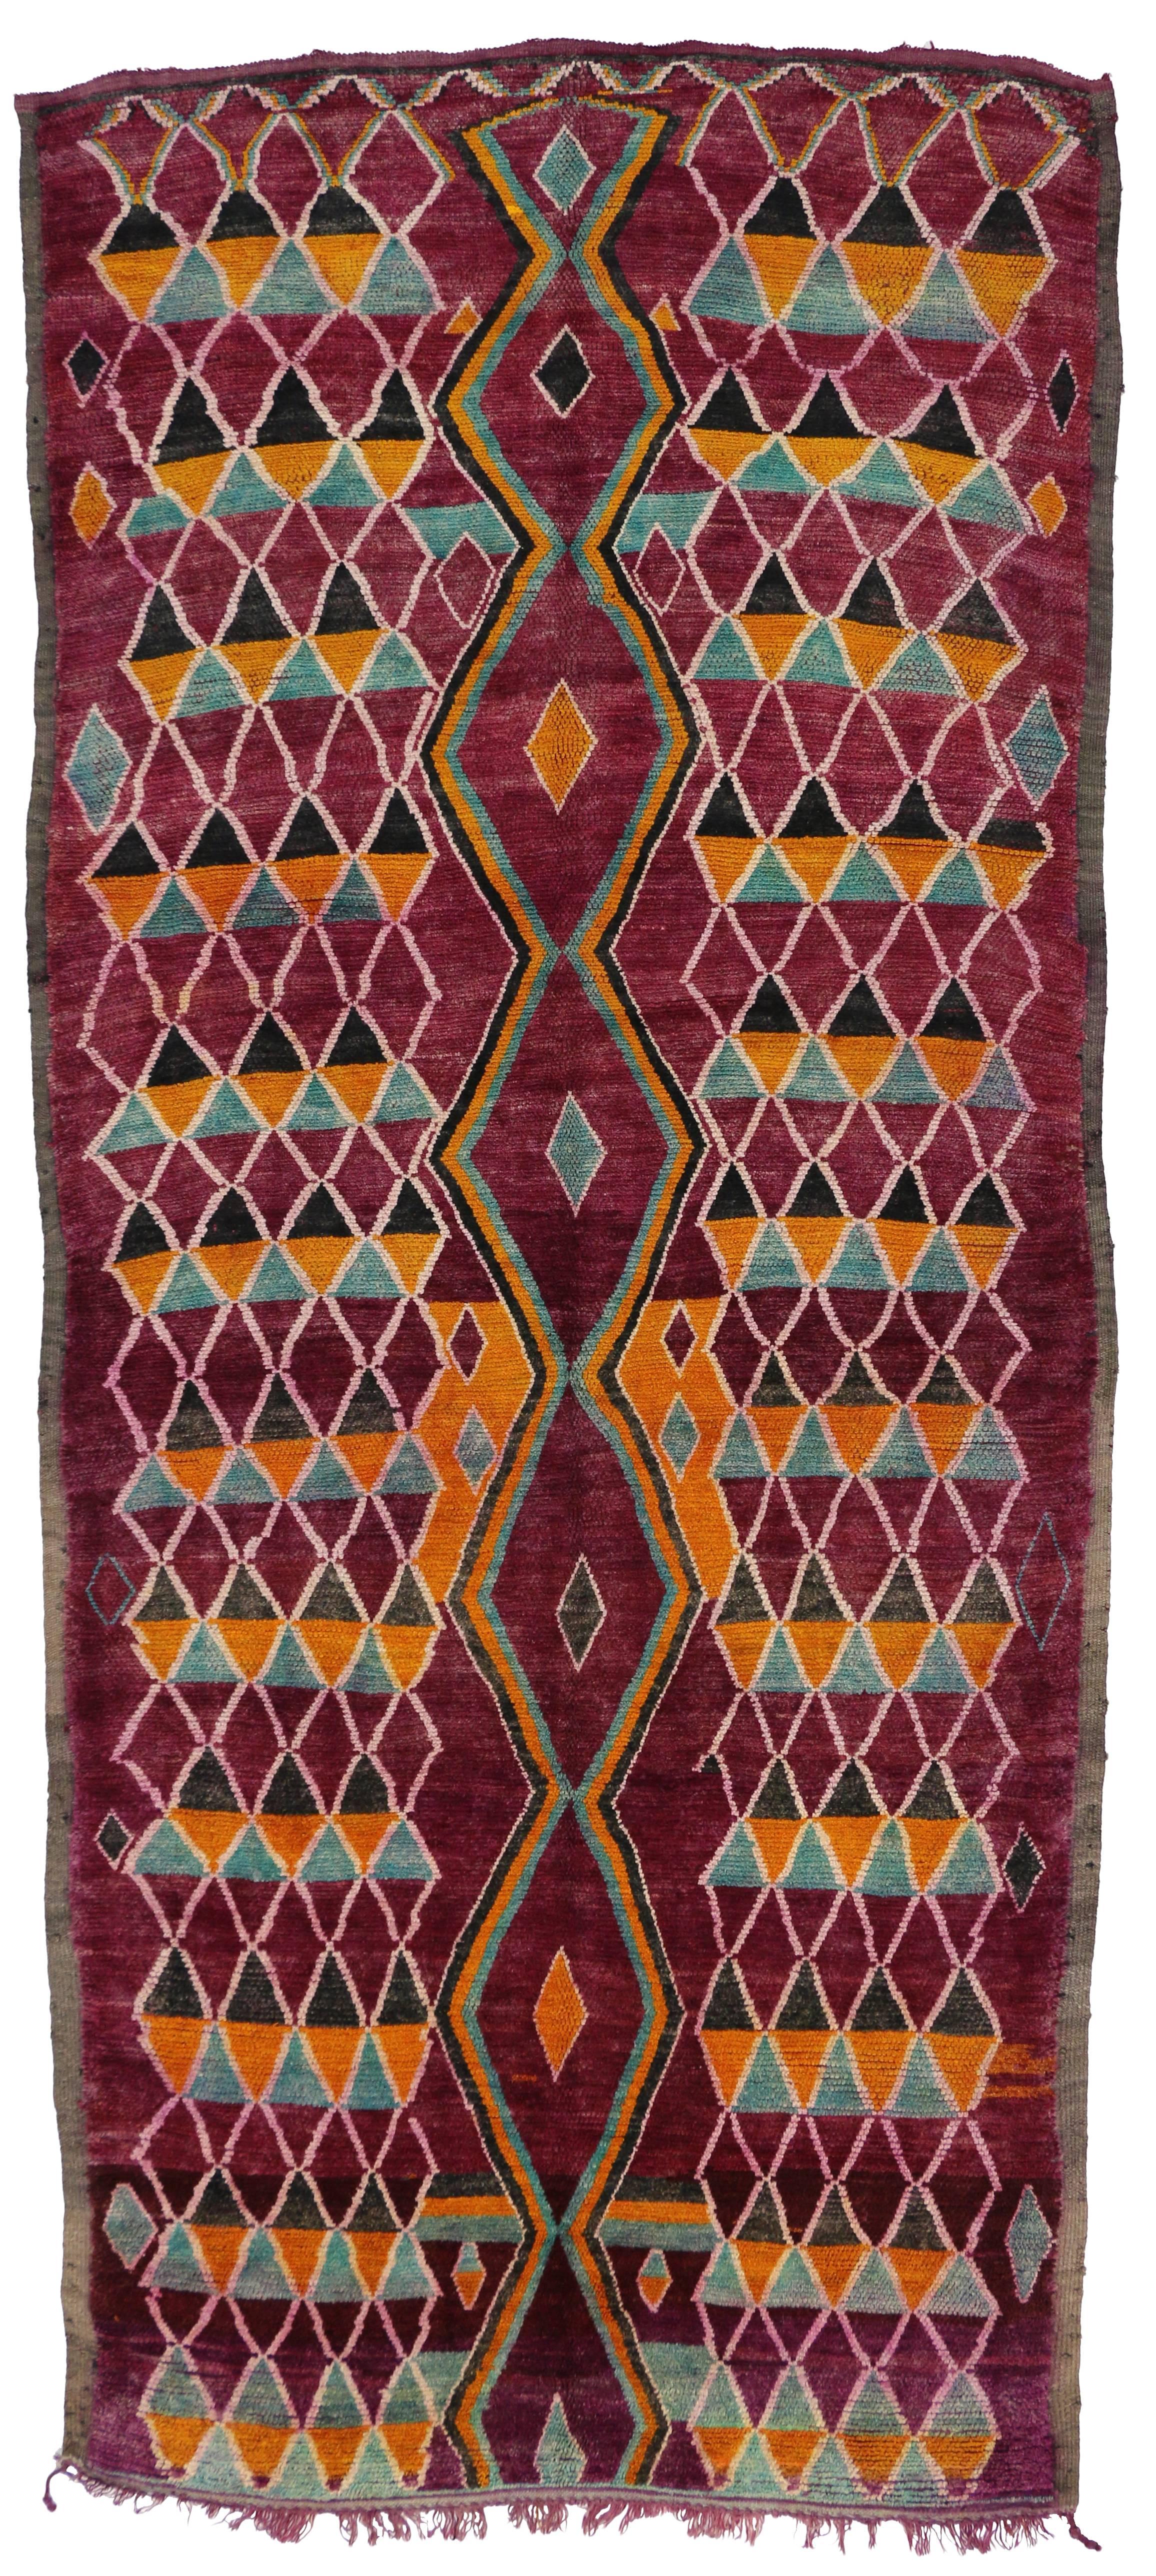 Wool Raspberry Vintage Berber Moroccan Rug with Modern Tribal Style